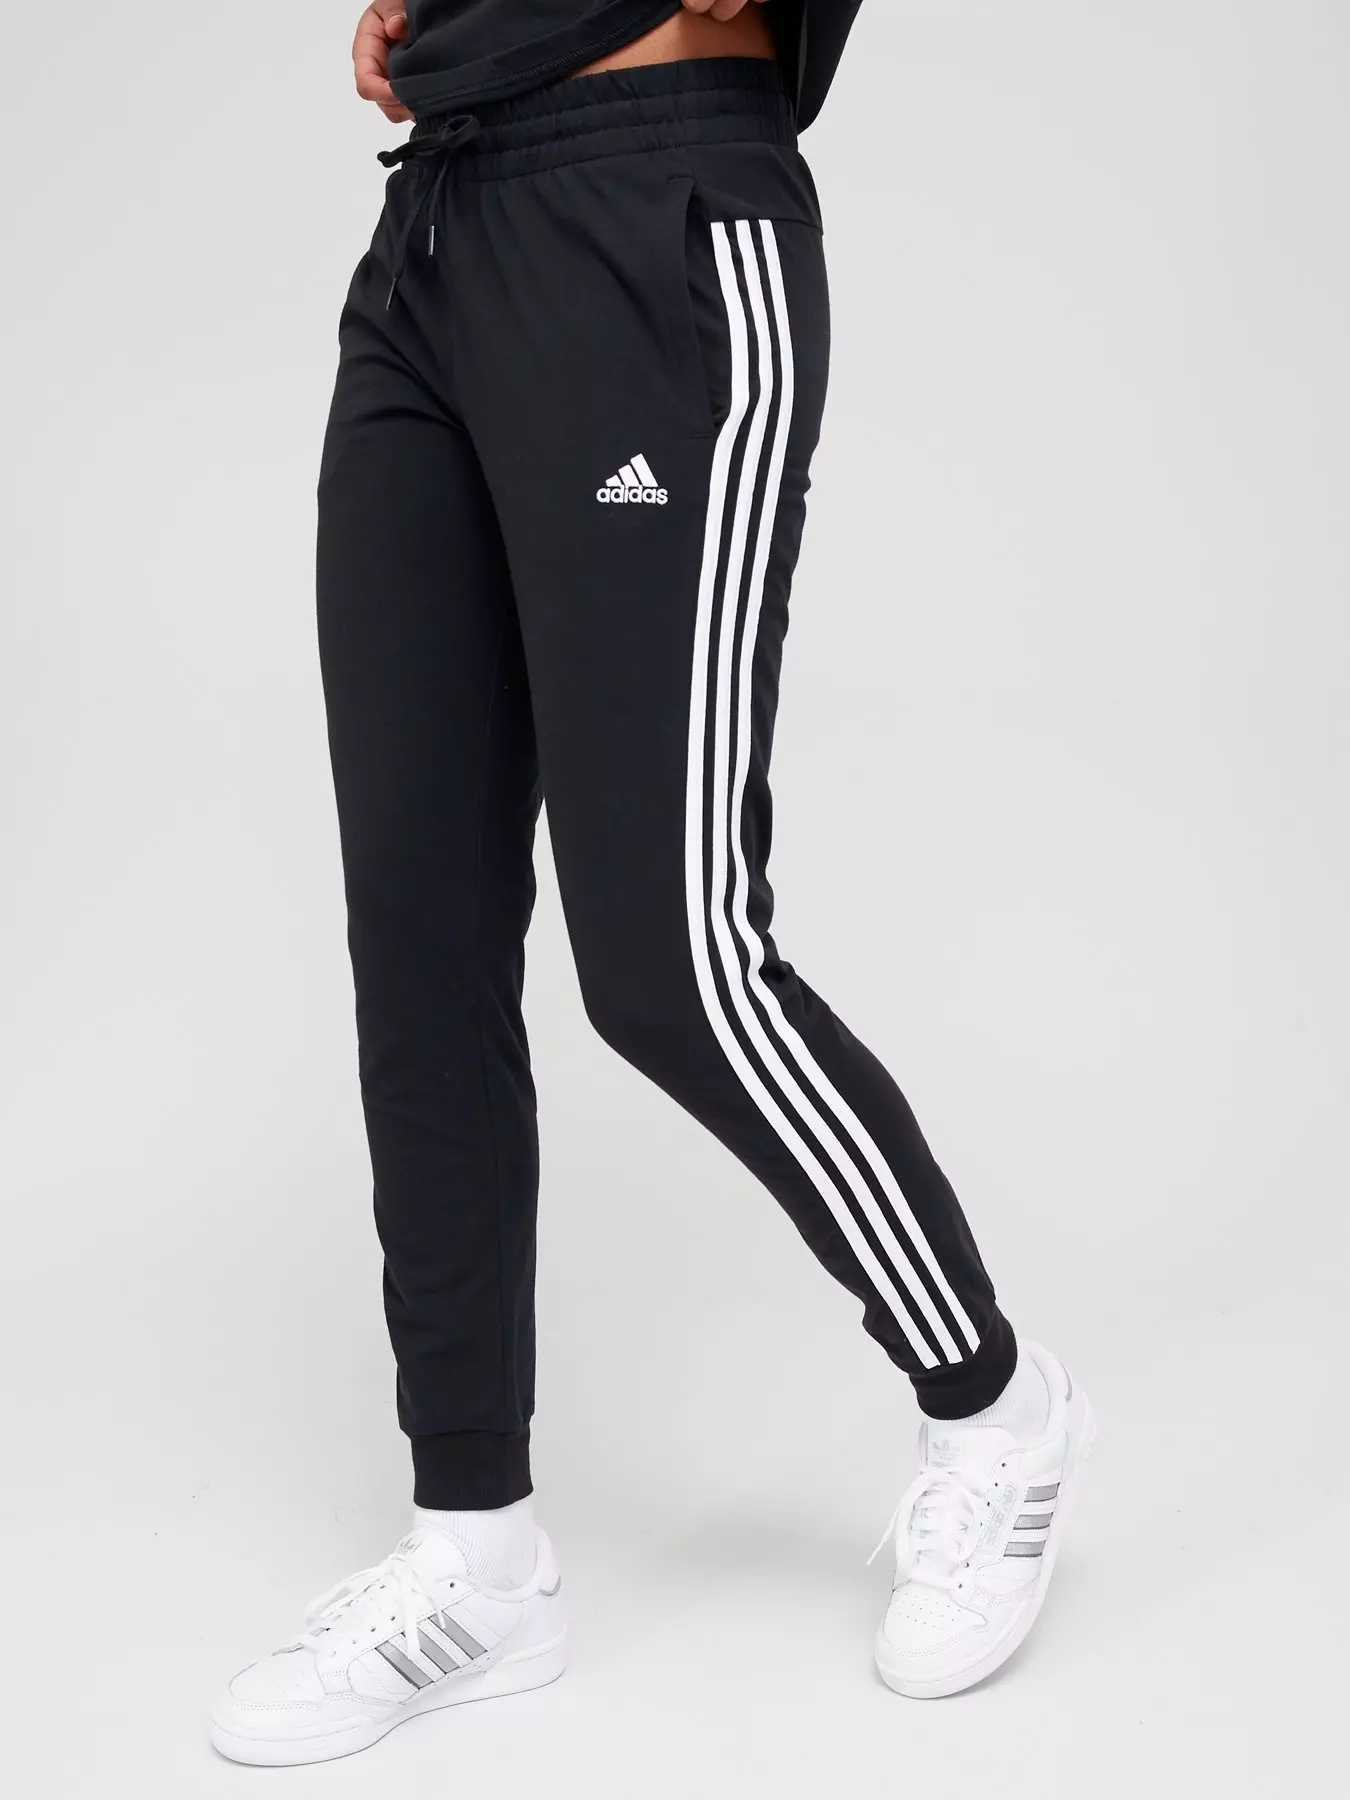 Women's Adidas Jogging Bottoms & | Very.co.uk